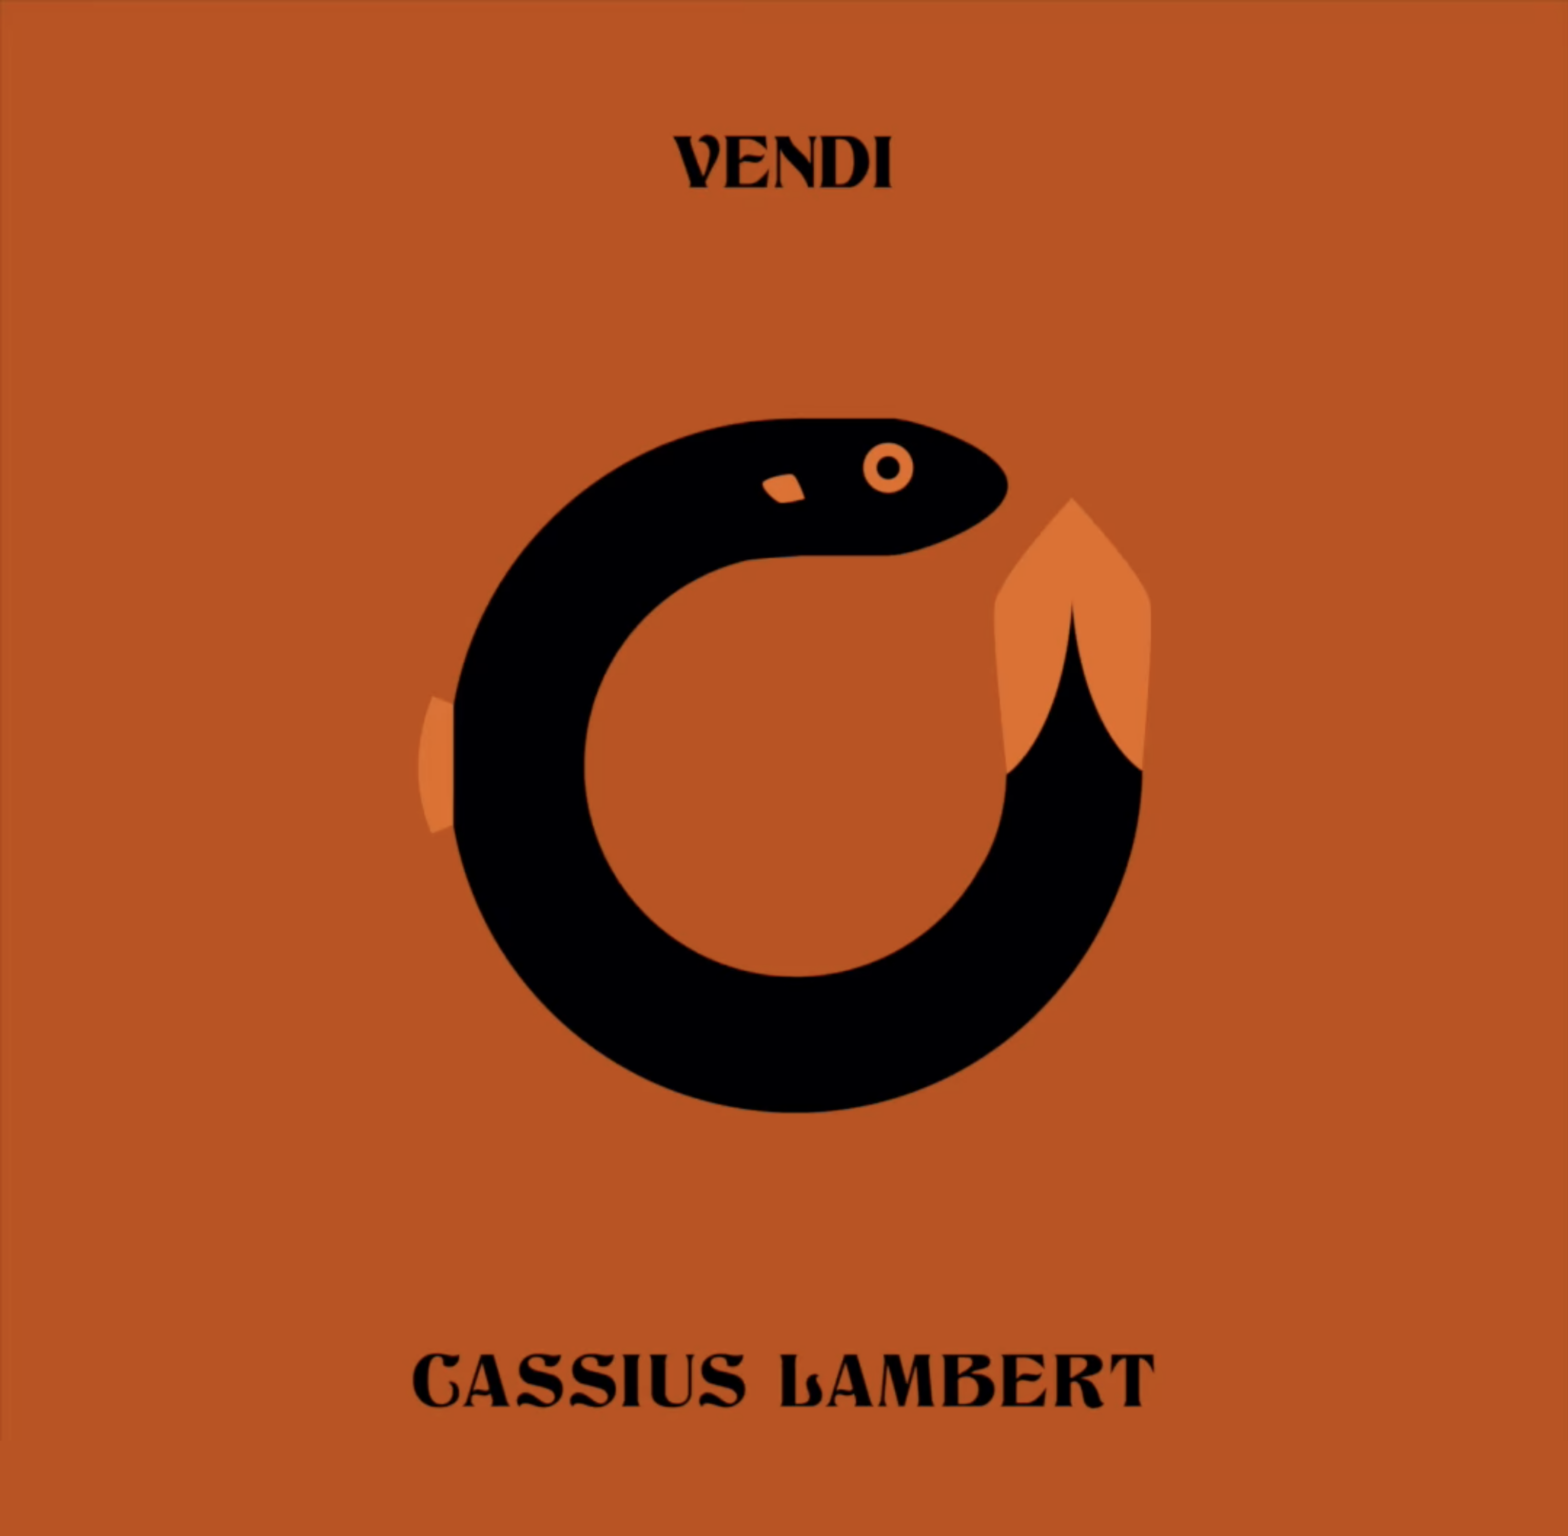 Album art - Vendi by Cassius Lambert